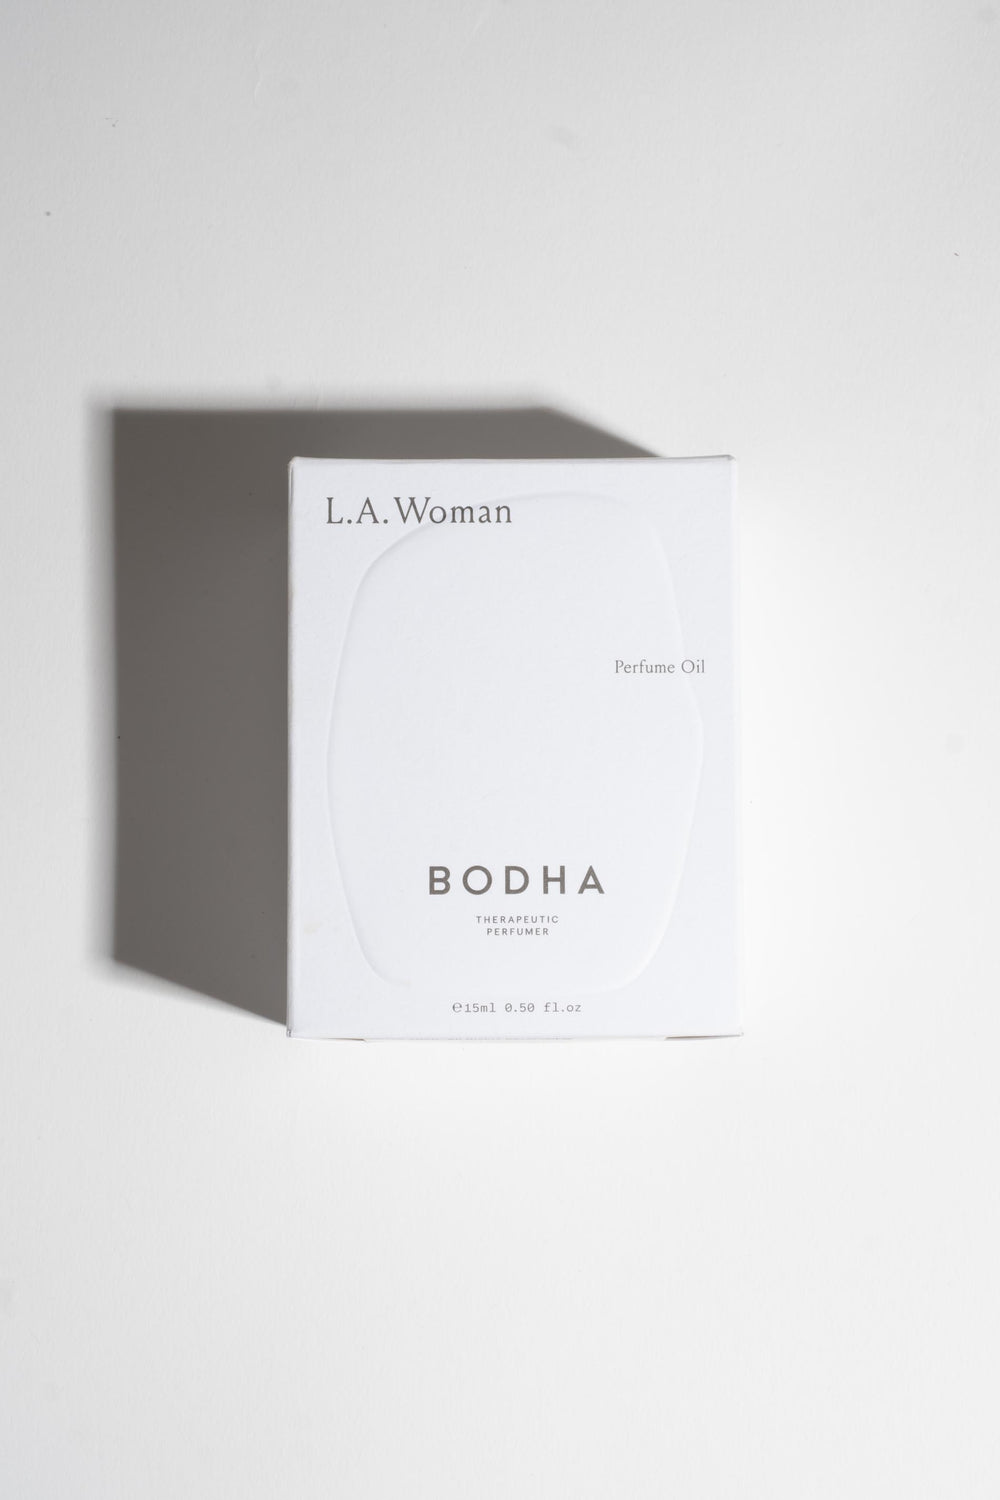 L.A. Woman - Perfume Oil